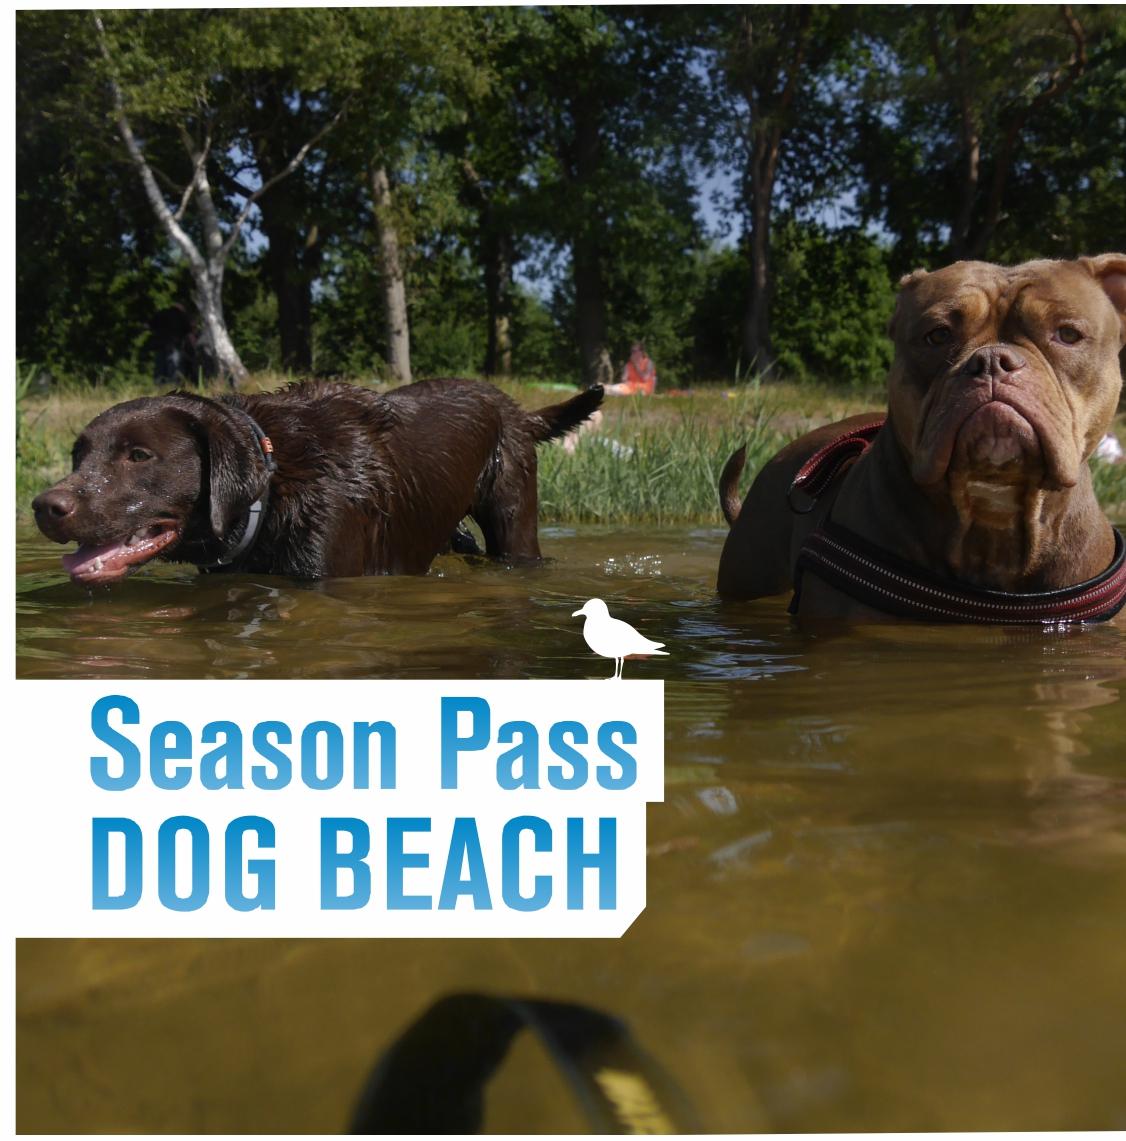 Season Pass Dog Beach